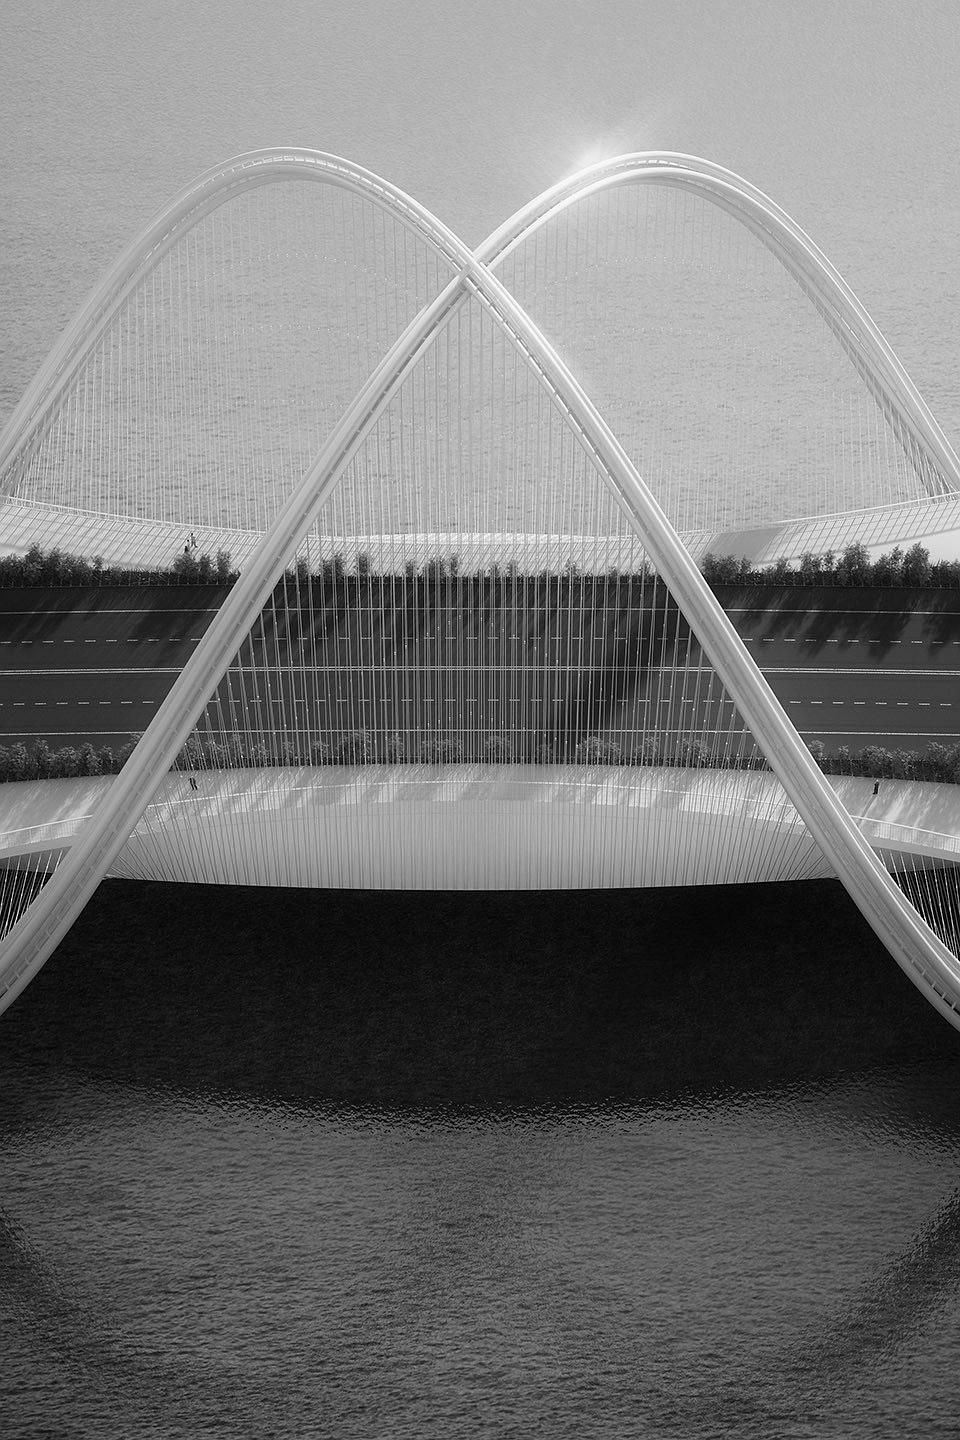 p47680380 北京冬奥会景观桥设计——五环廊桥赏析（腾云驾雾的不真实感，美！！！）